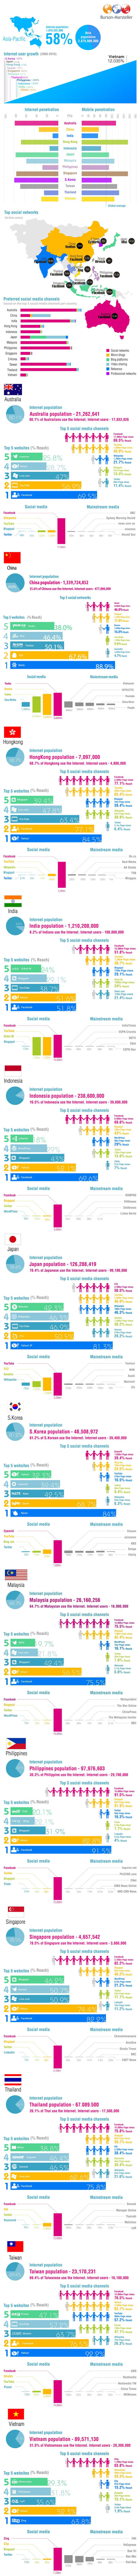 Asia-Pacific Social Media Statistics